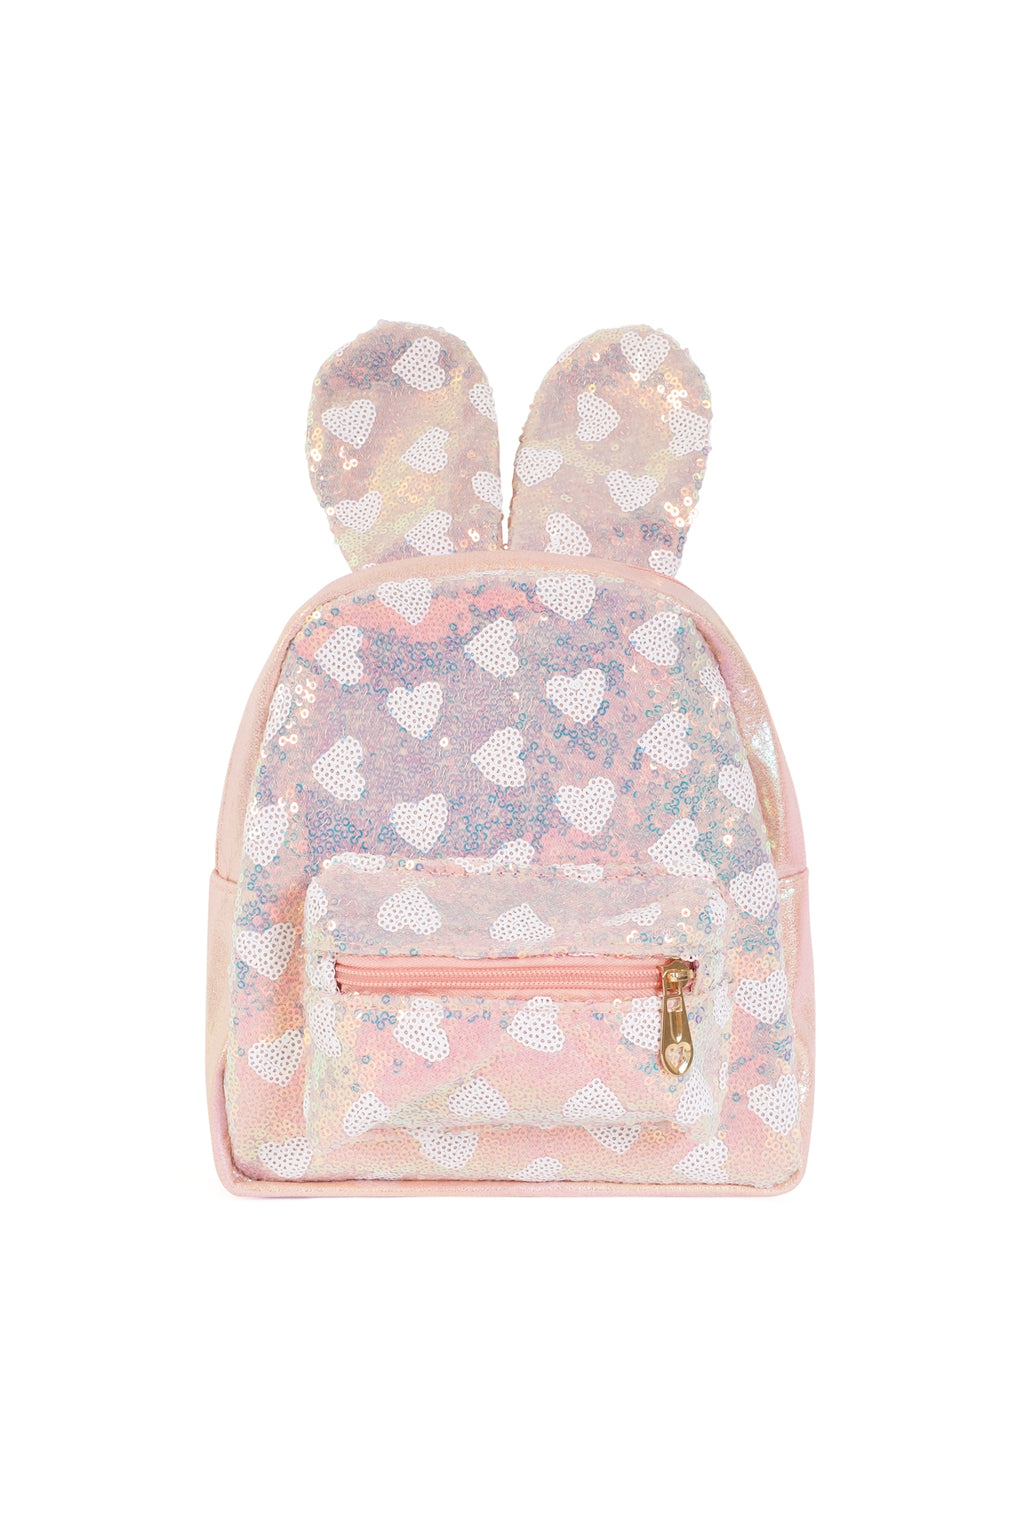 Cute Bunny Ears Glitters Kids Backpack Pink - Pack of 6